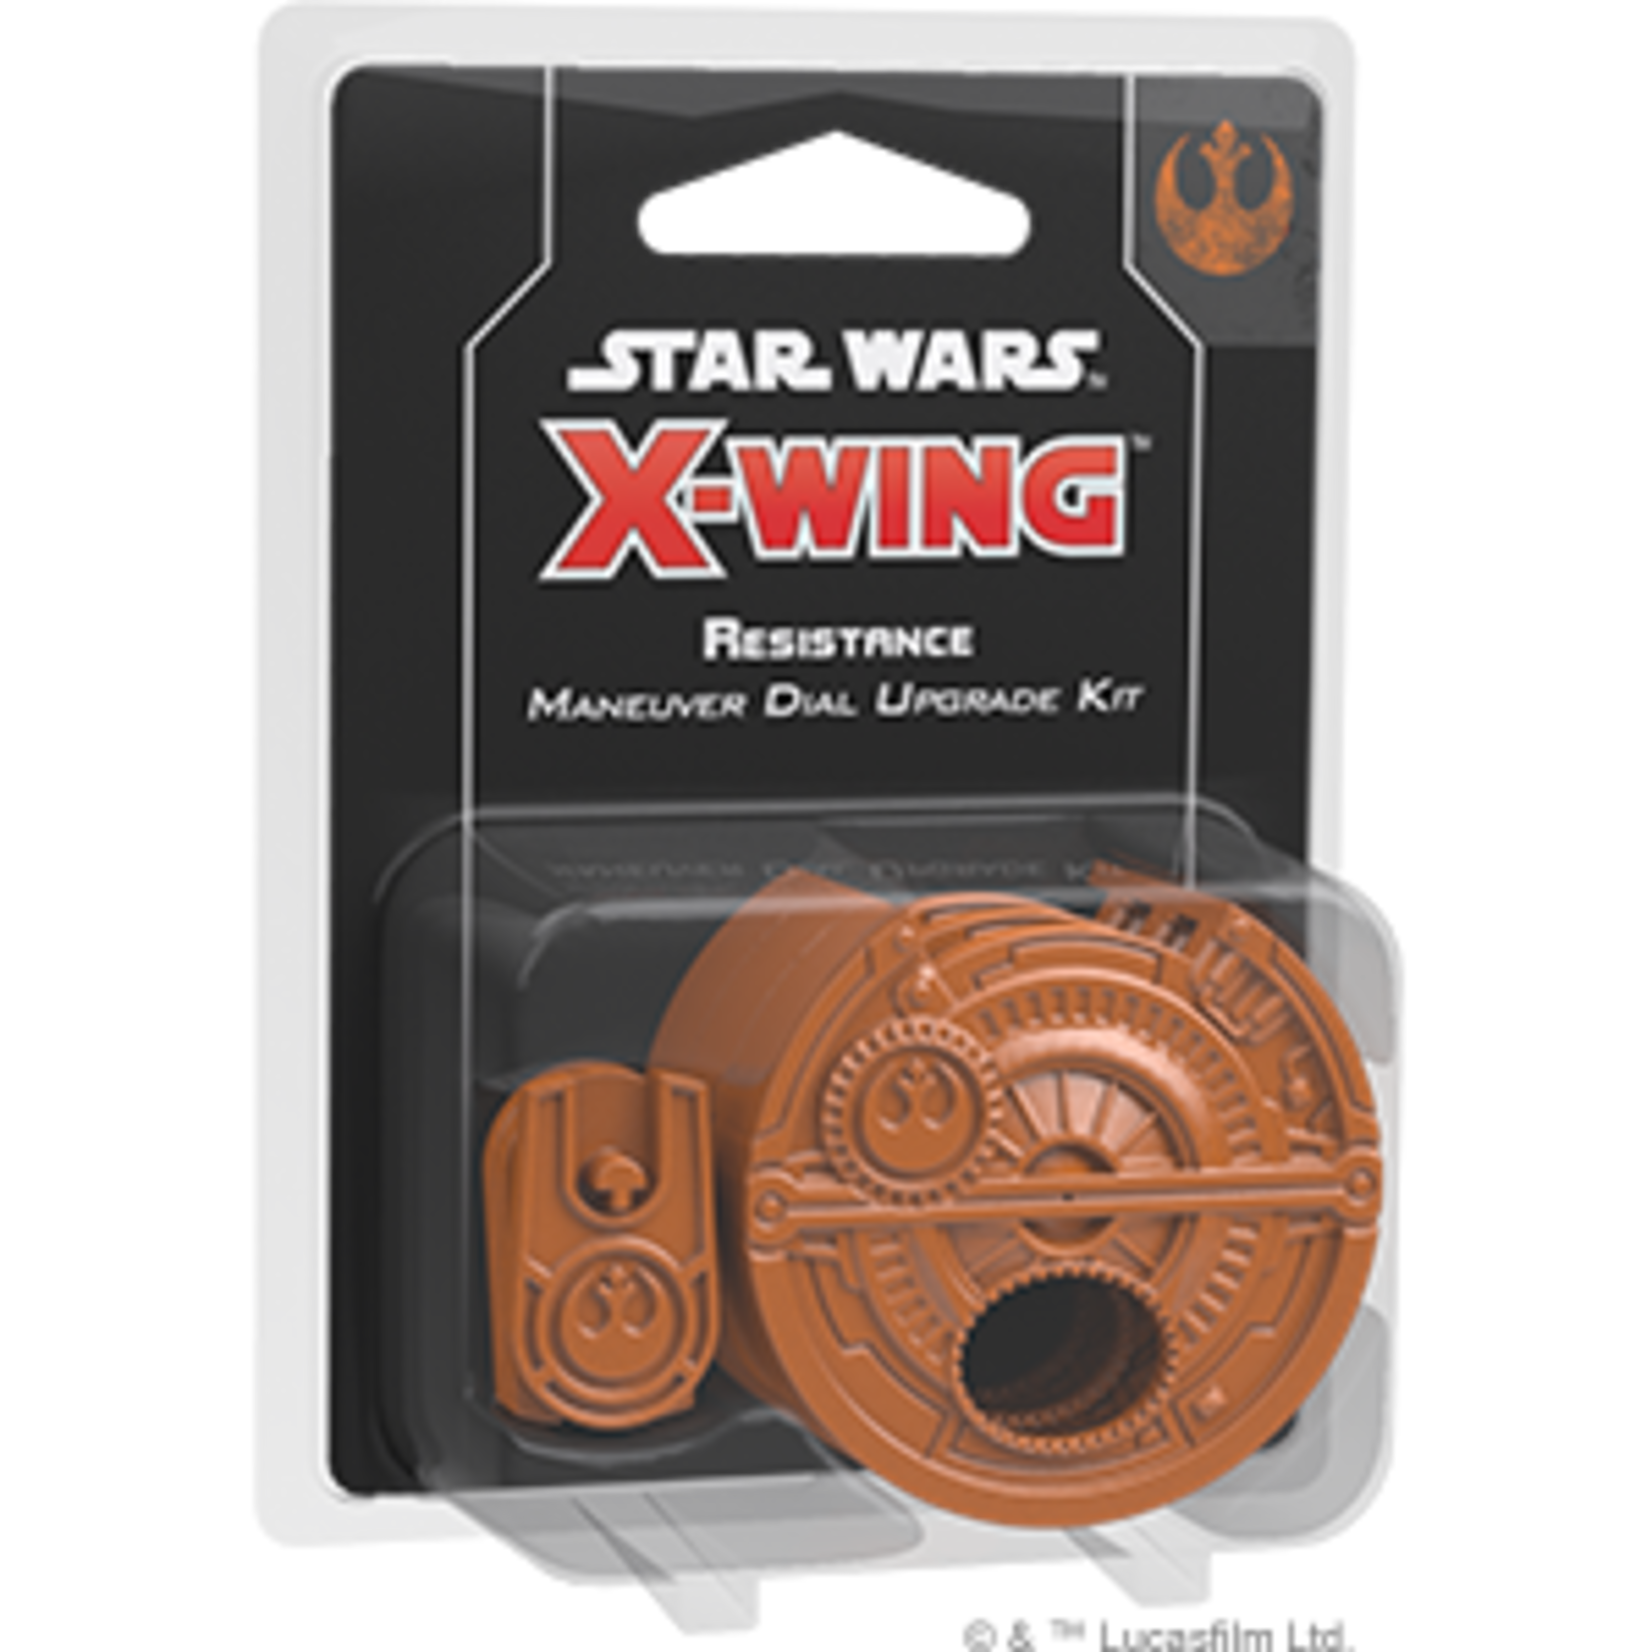 Fantasy Flight Games Star Wars X-Wing: 2nd Edition - Resistance Maneuver Dial Upgrade Kit